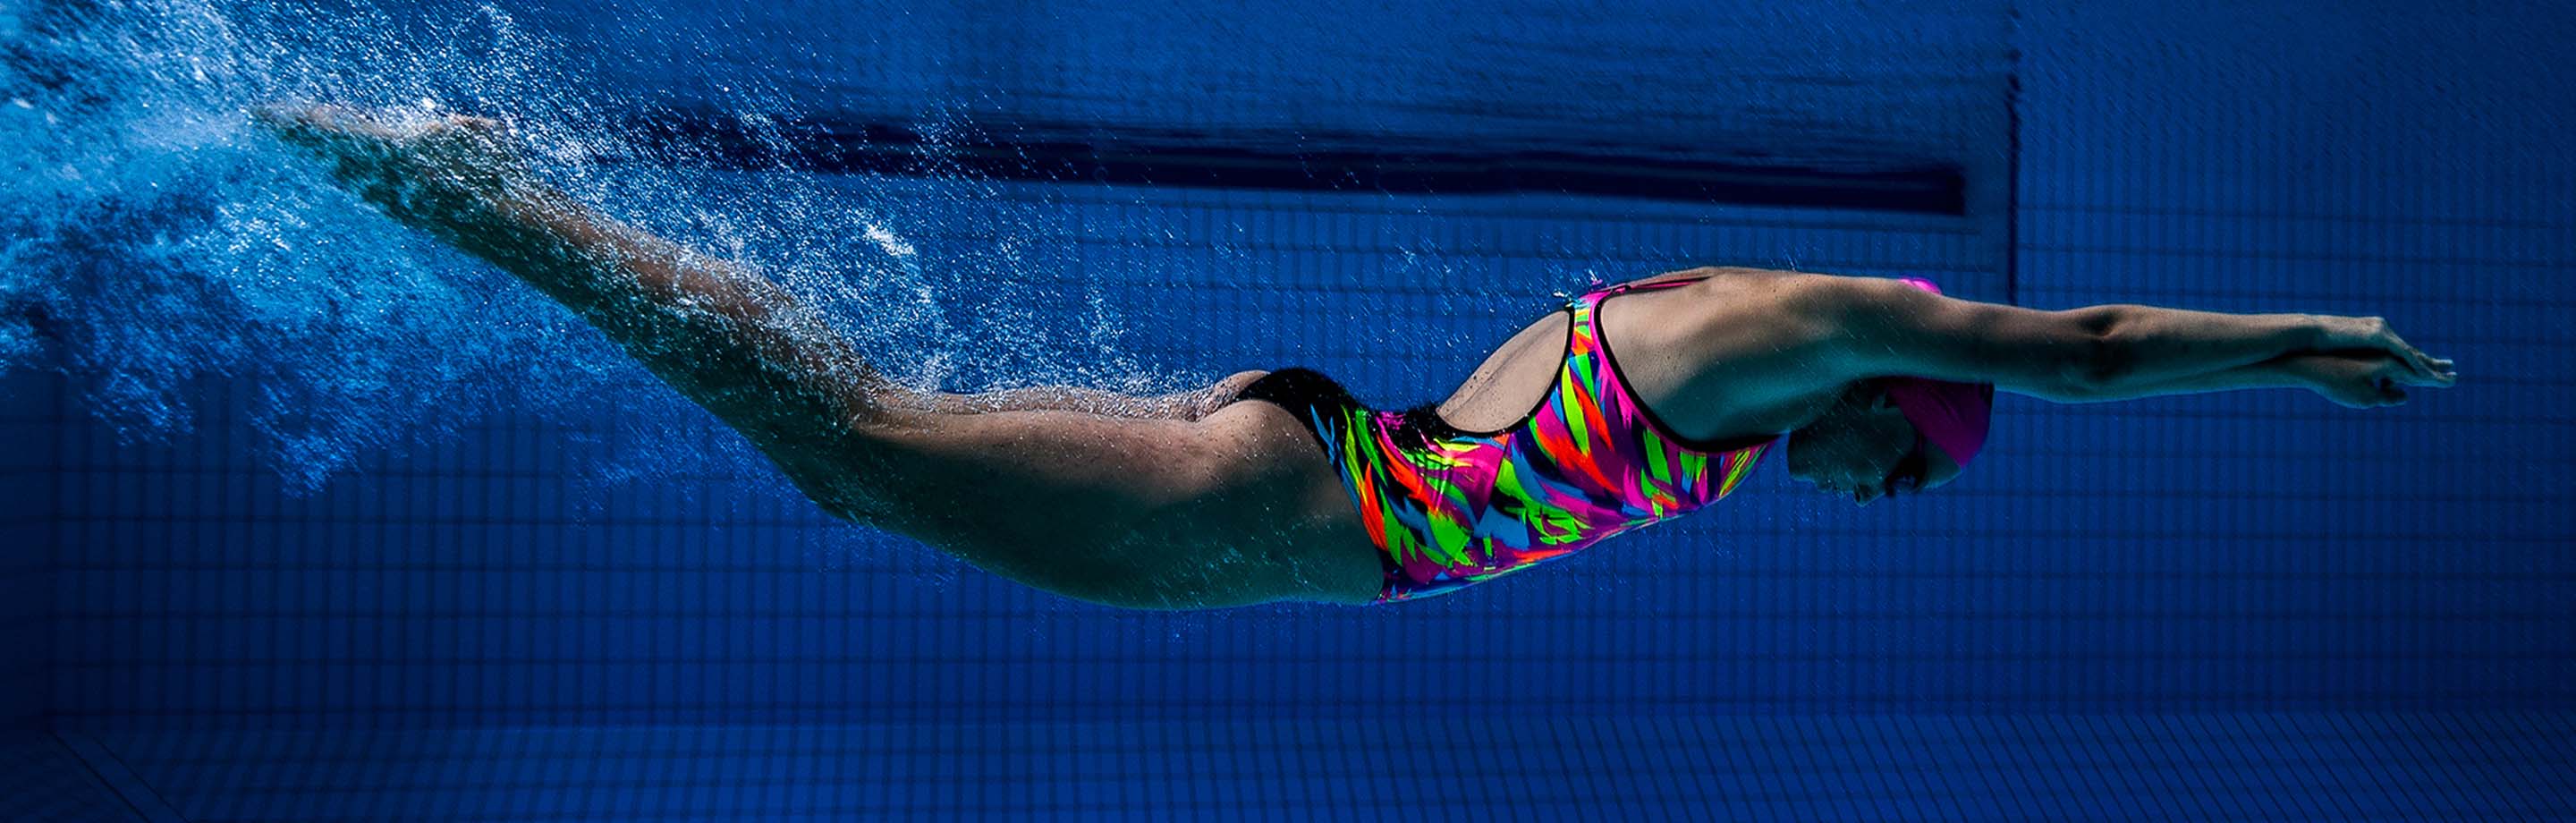 Funkita Swim Wear - professionele en kleurrijke zwempakken en bikini's